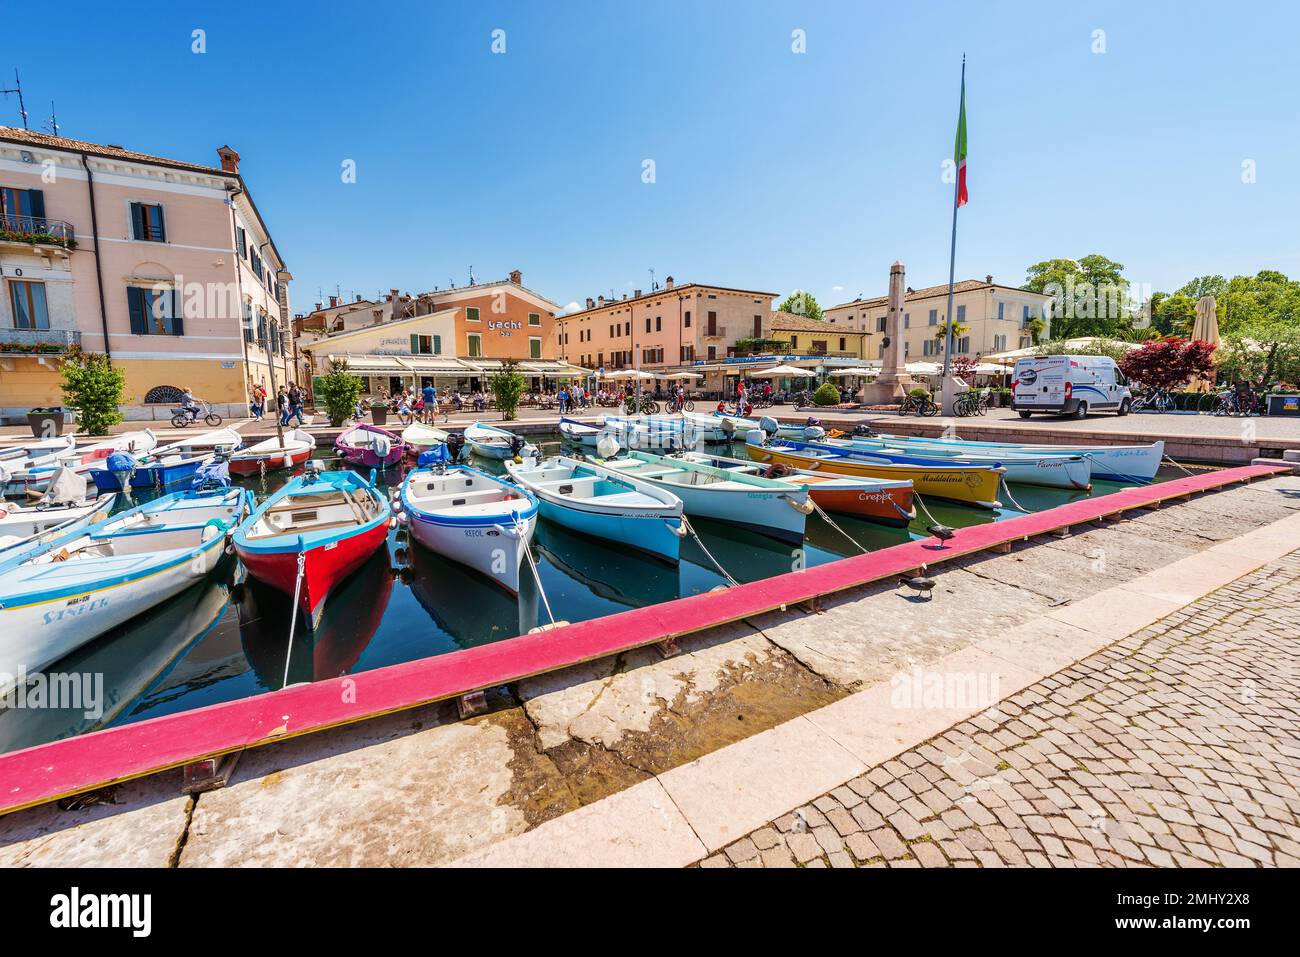 Port of the village of Bardolino with many boats moored. Tourist resort on the coast of Lake Garda (Lago di Garda). Verona, Veneto, Italy, Europe. Stock Photo